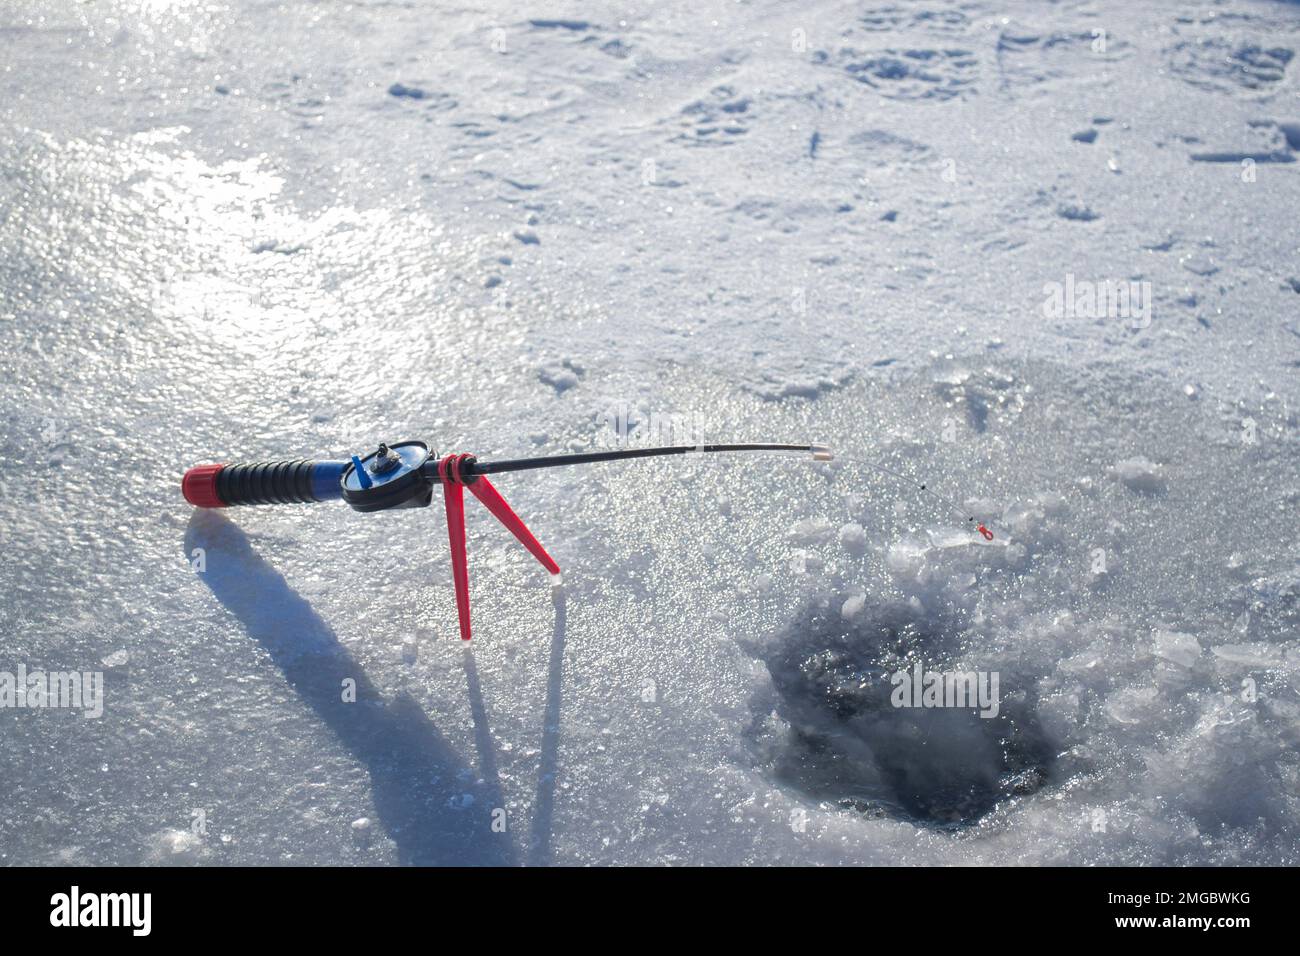 Winter ice fishing. Ice fishing in the winter. Small fishing rod